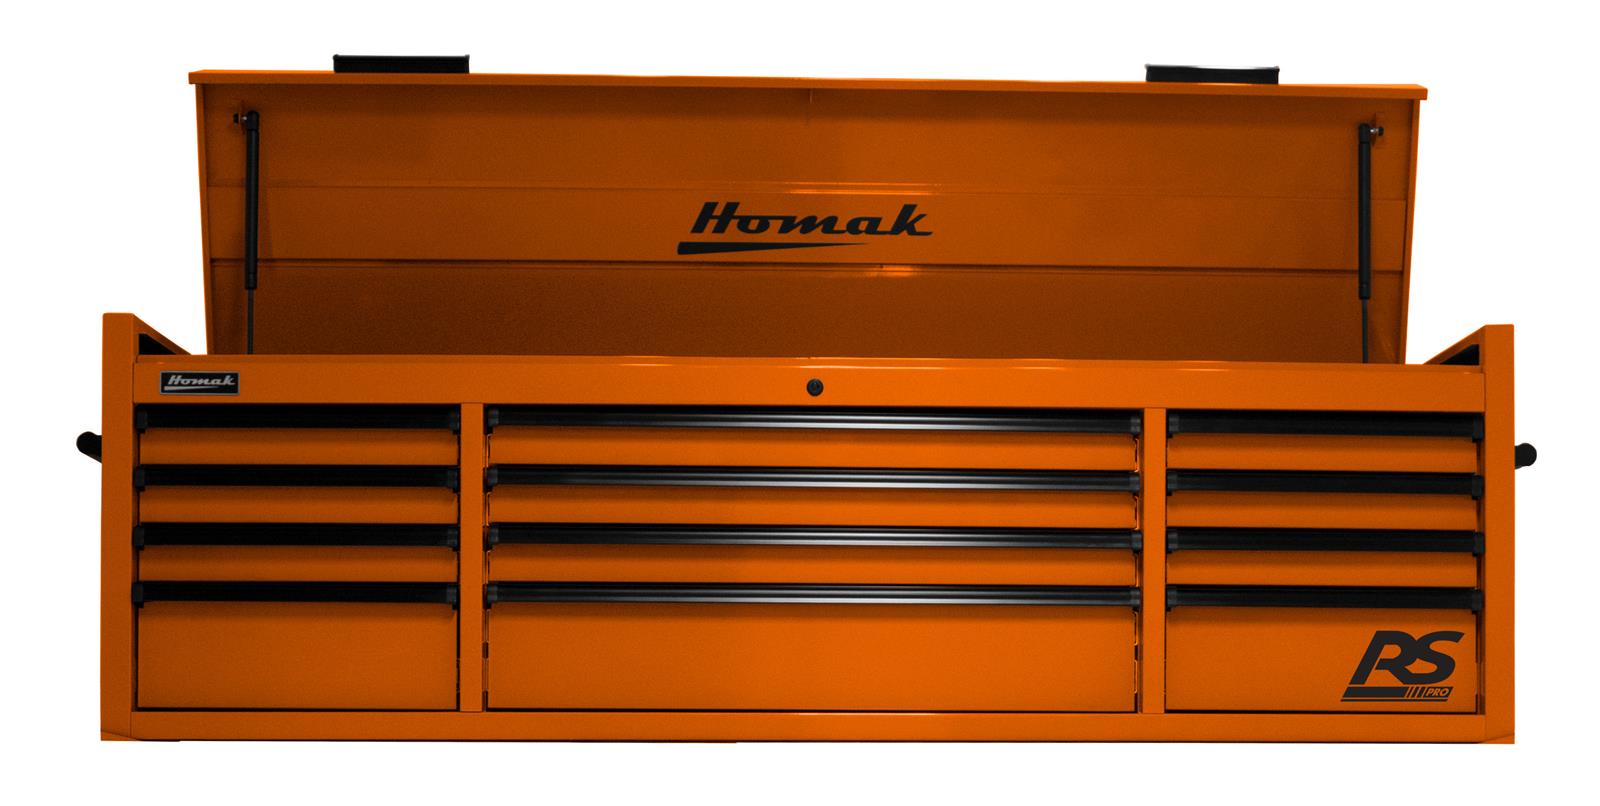 Homak OG02072120 72" RS Pro Series 12-Drawer Top Chest - Orange - MPR Tools & Equipment